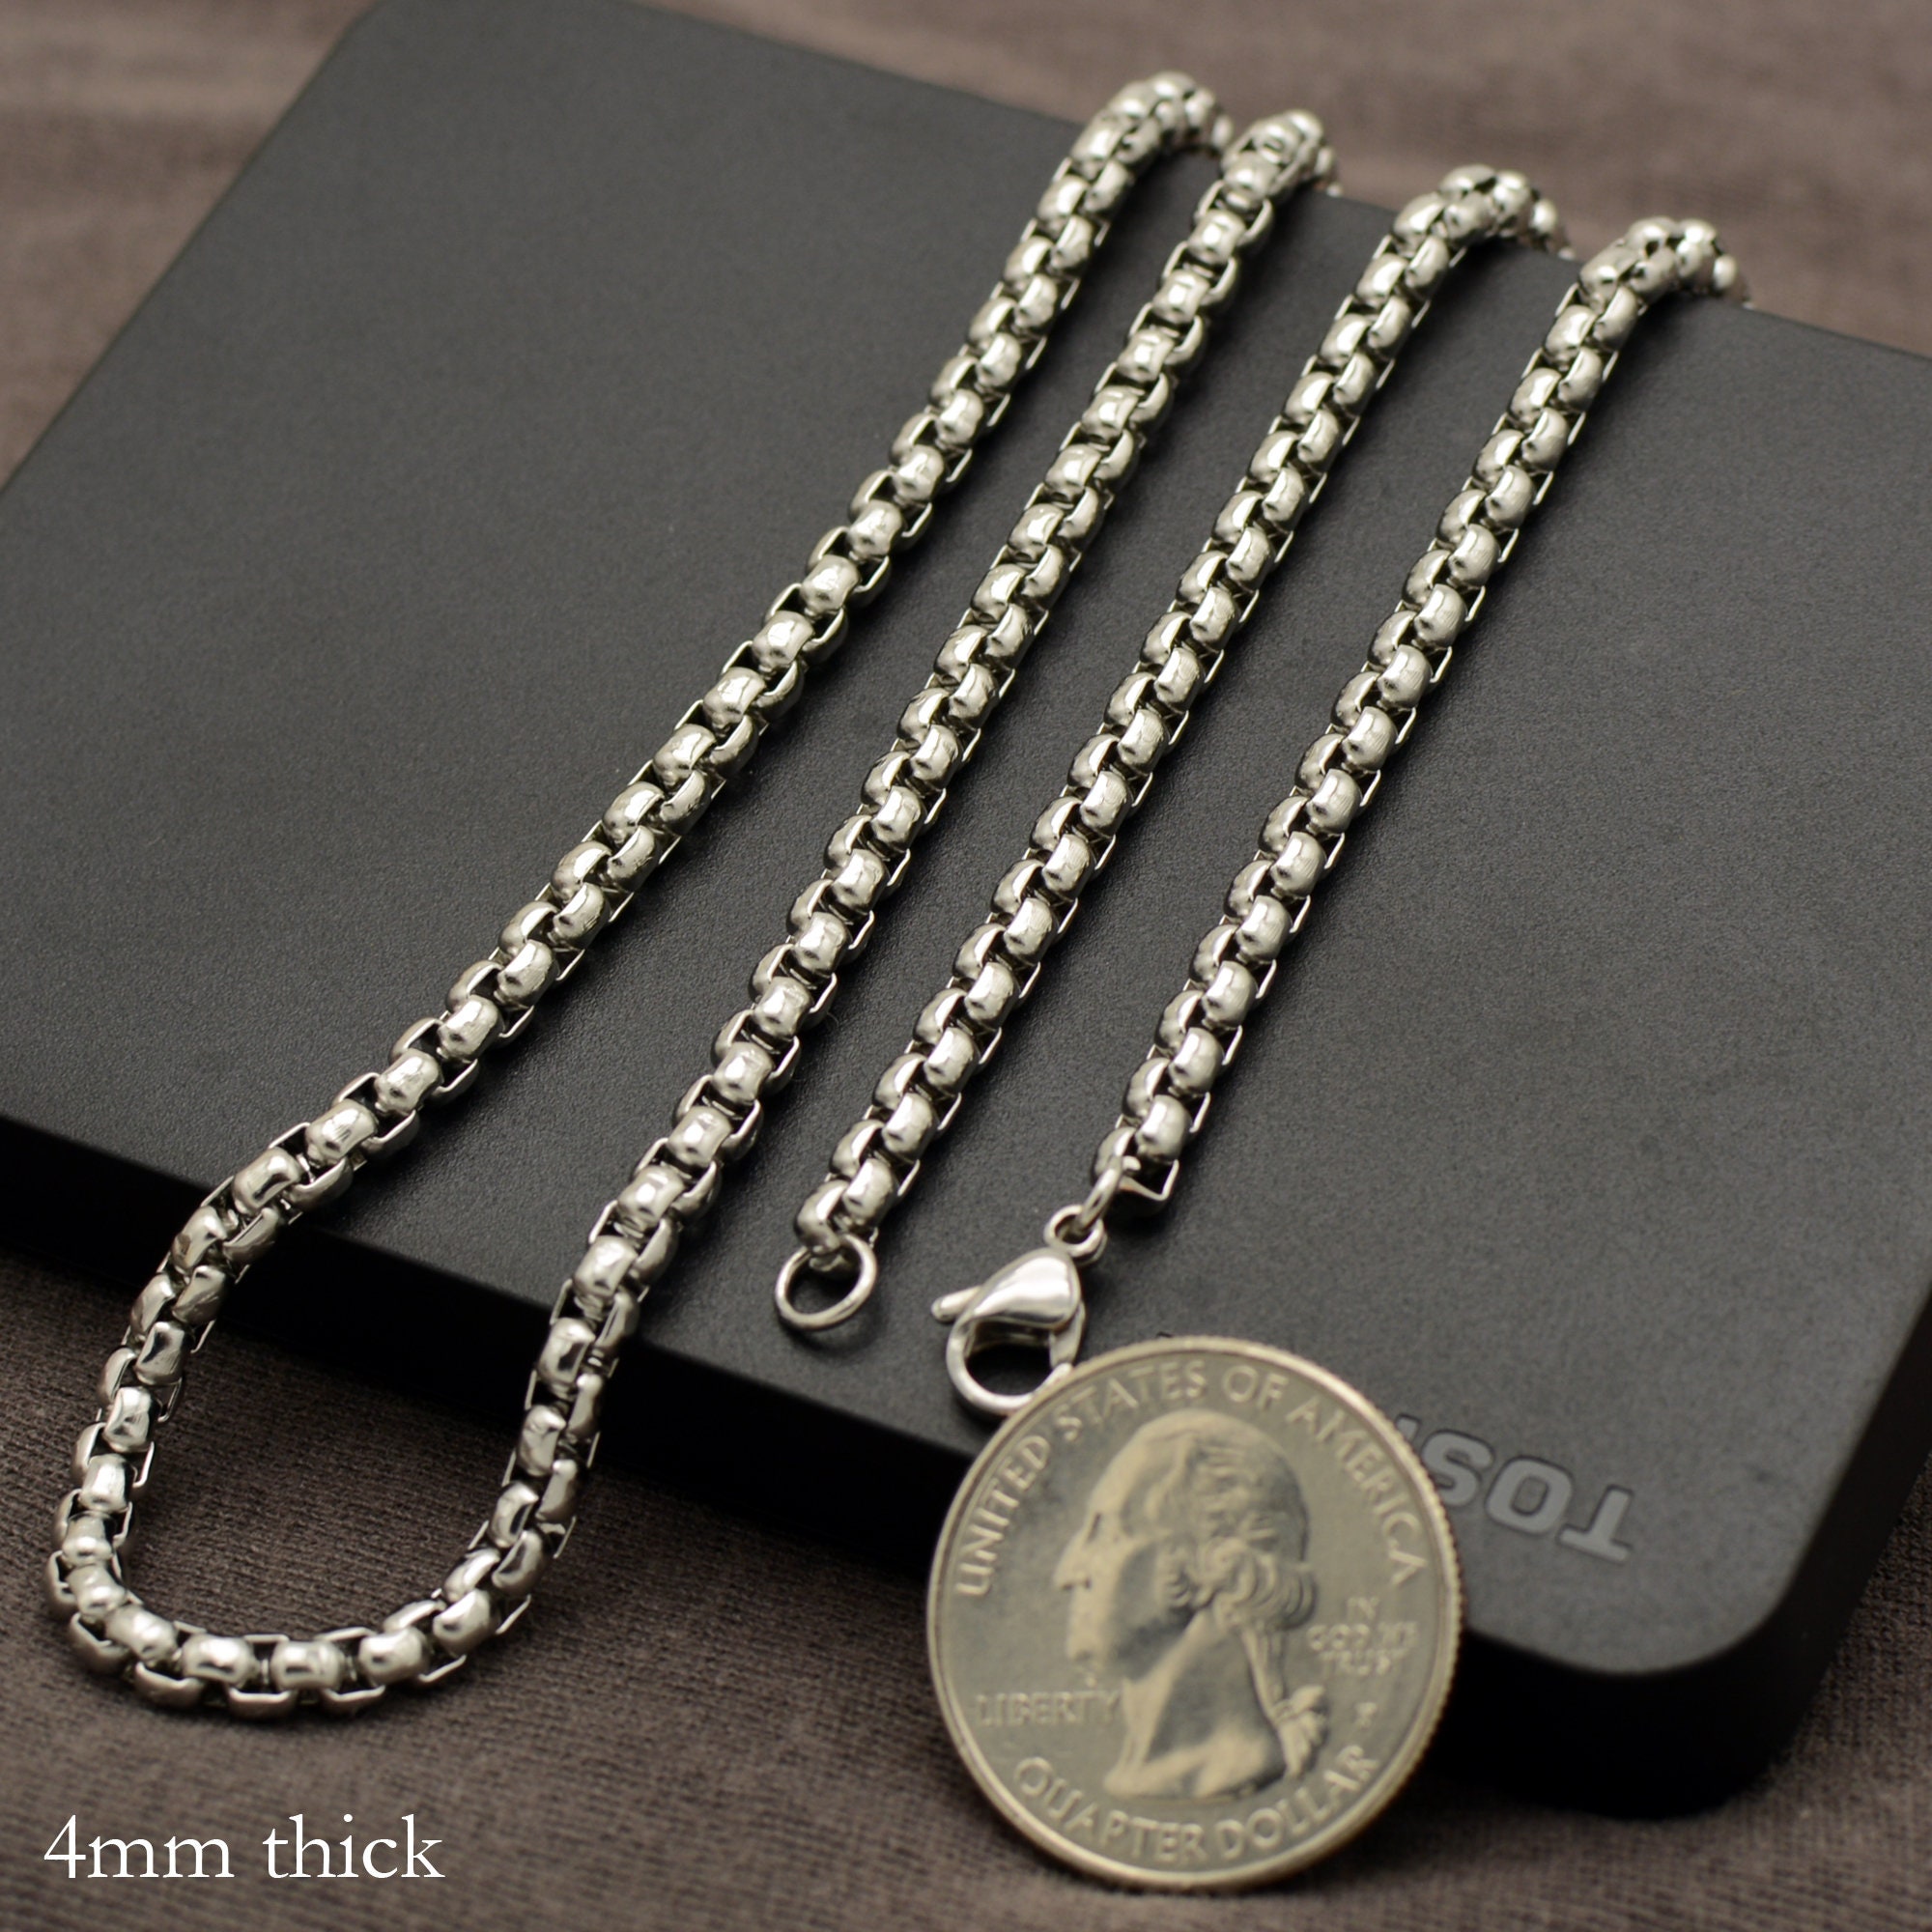 Vintage silvertone metal box chain 2 strap necklaces 26 inches